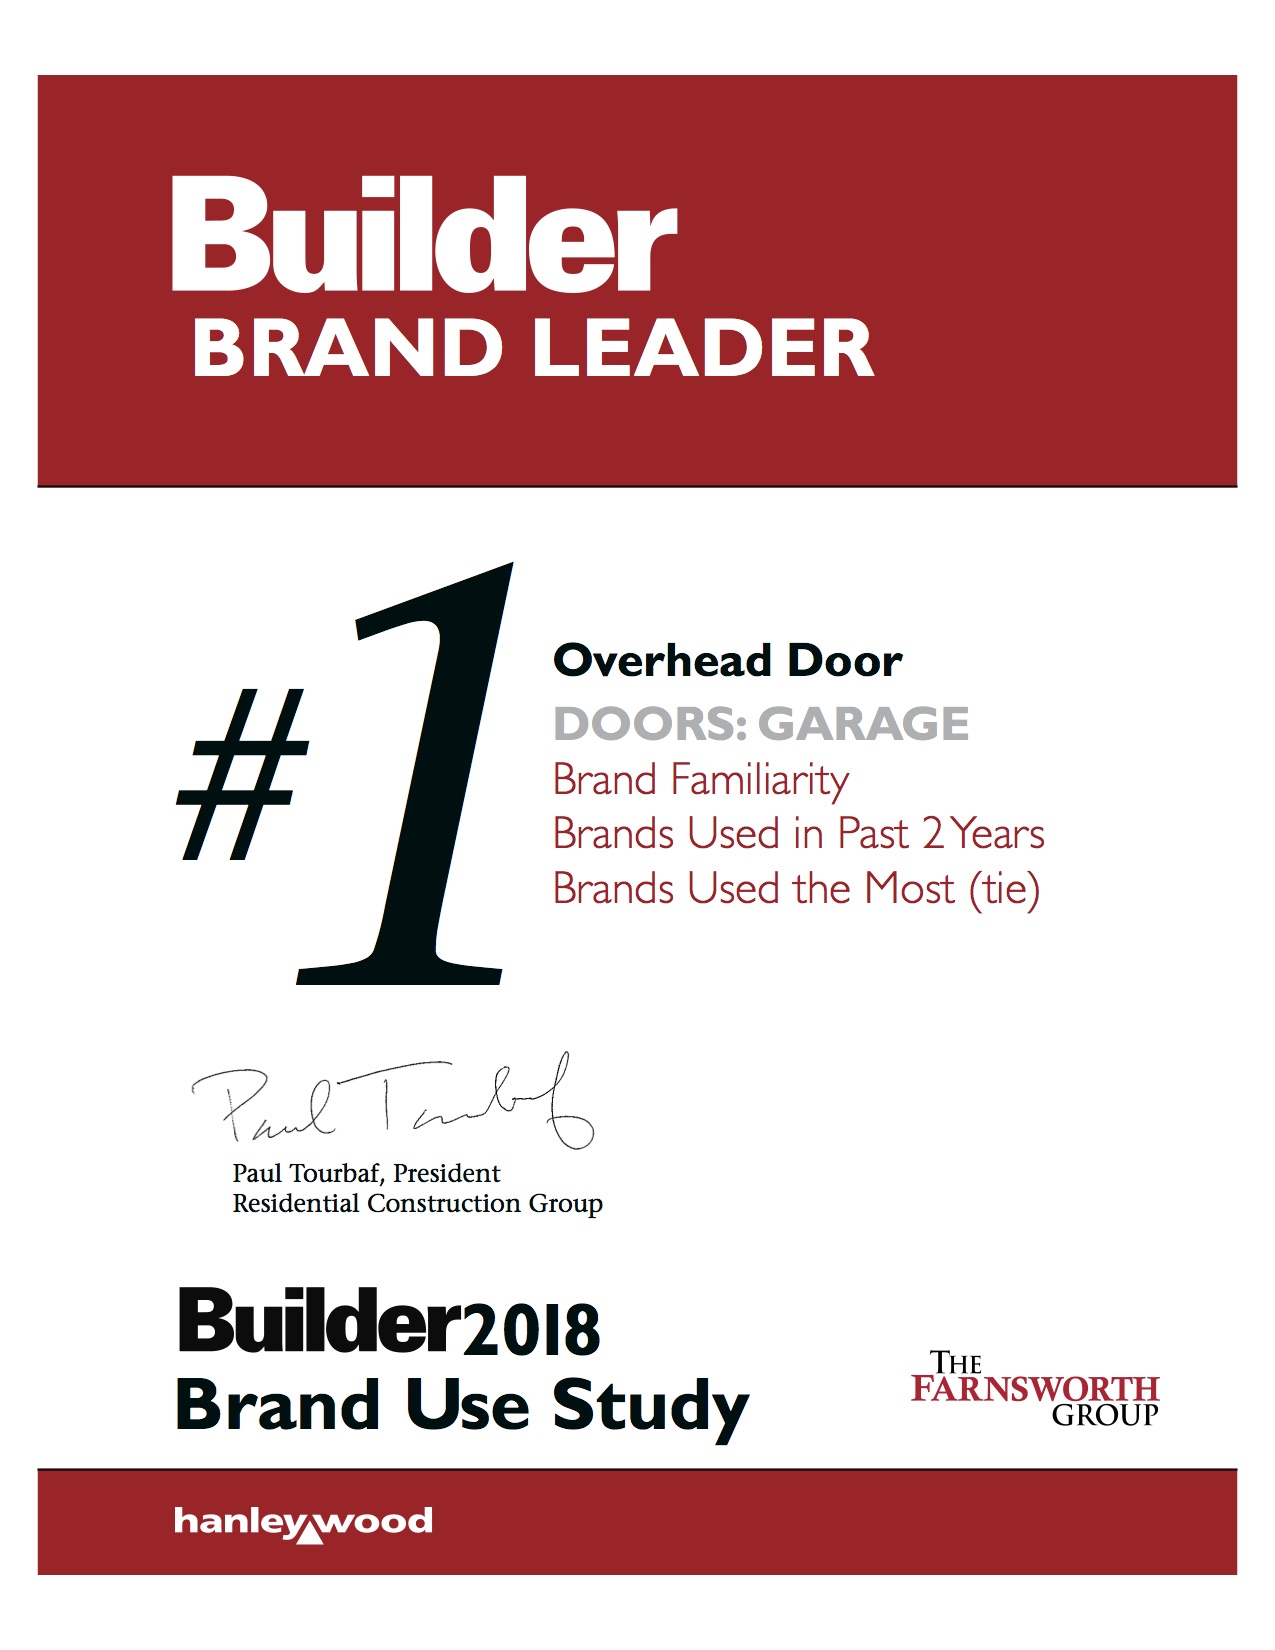 Overhead Door Company wins 2018 Builder Brand Use Study